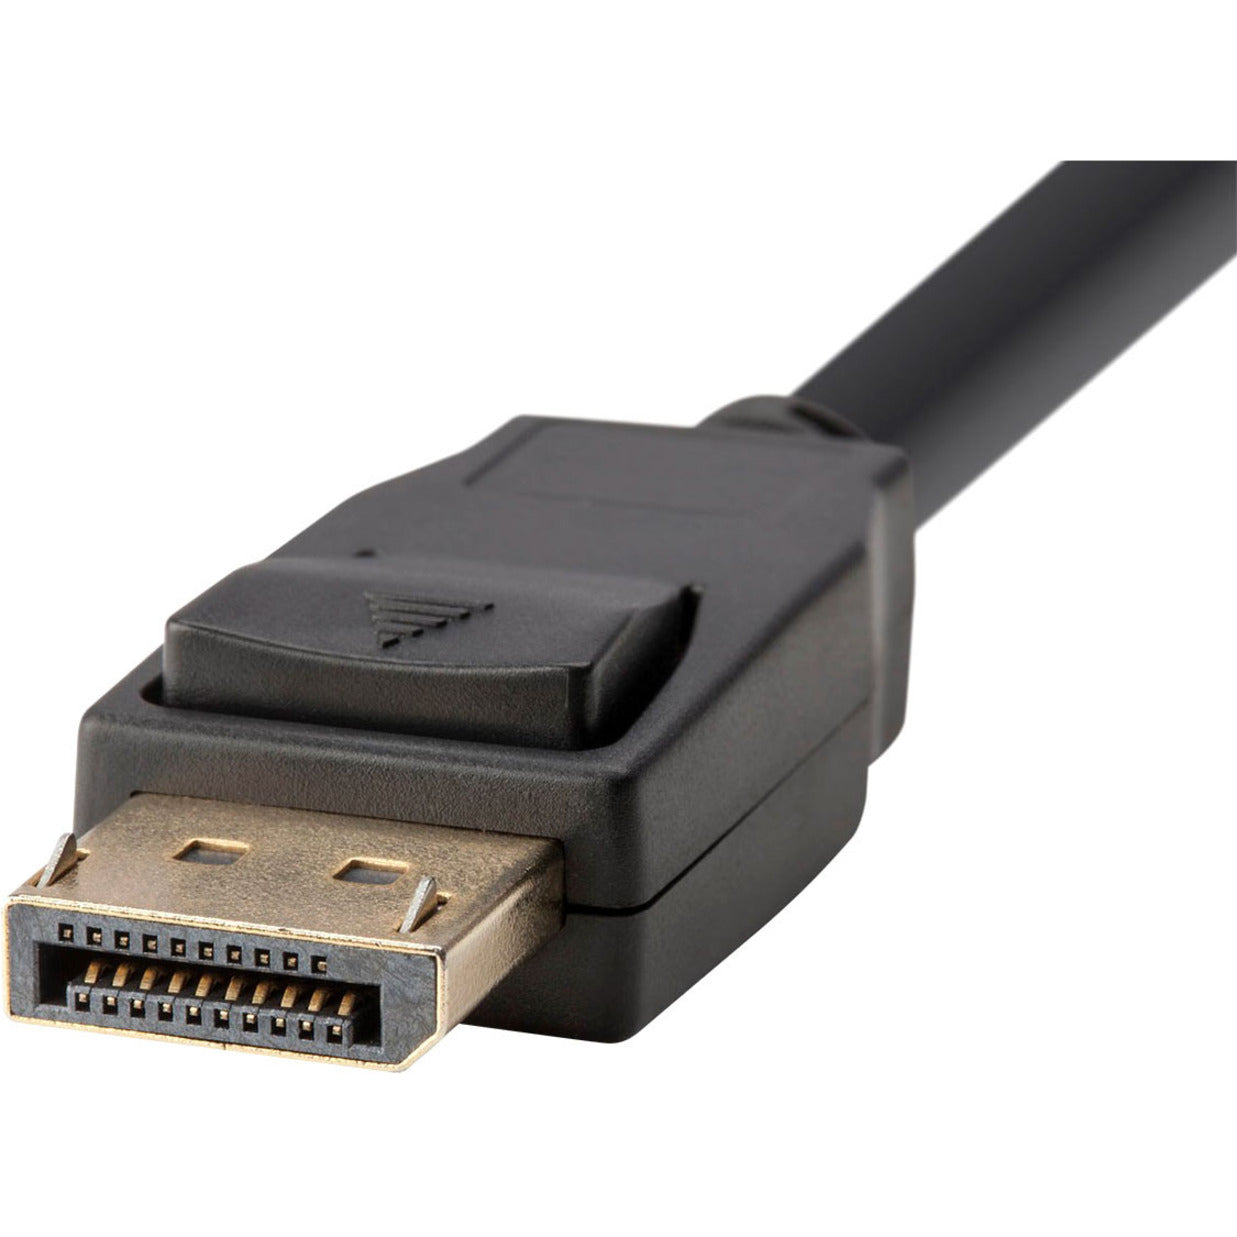 Monoprice Select Series Mini DisplayPort 1.2 to DisplayPort 4K Capable Cable 15ft